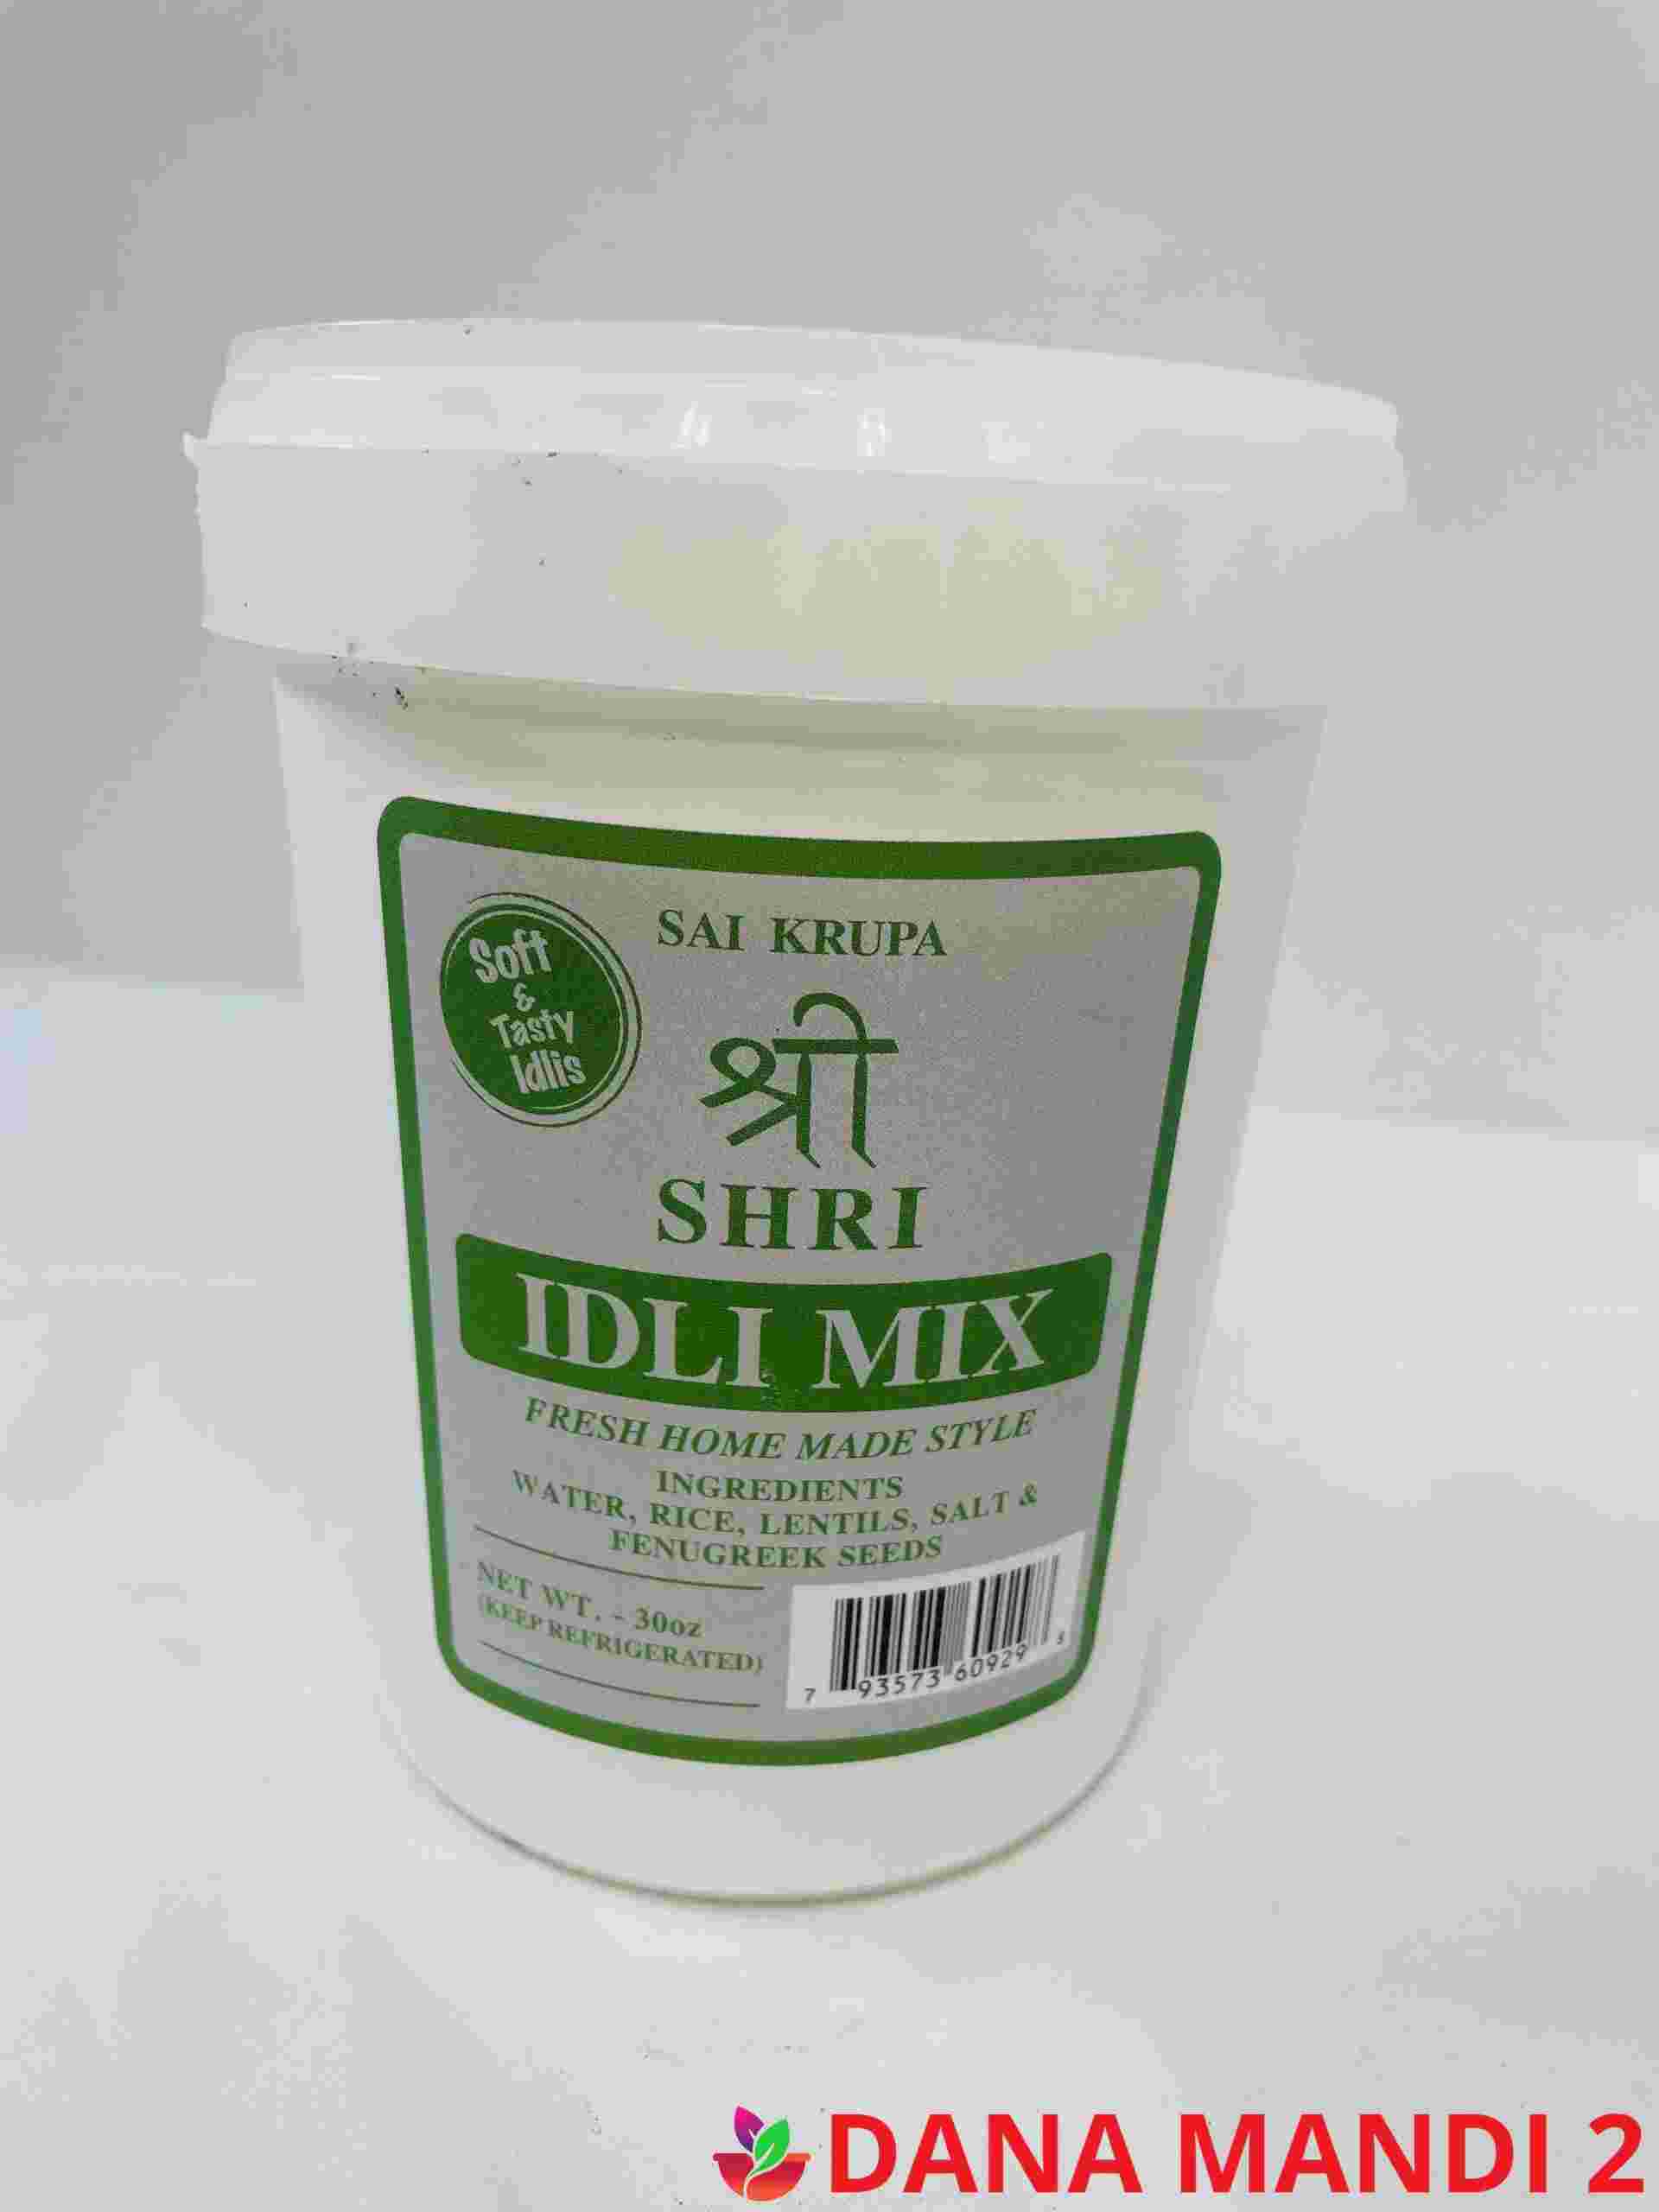 Shri Idli Mix